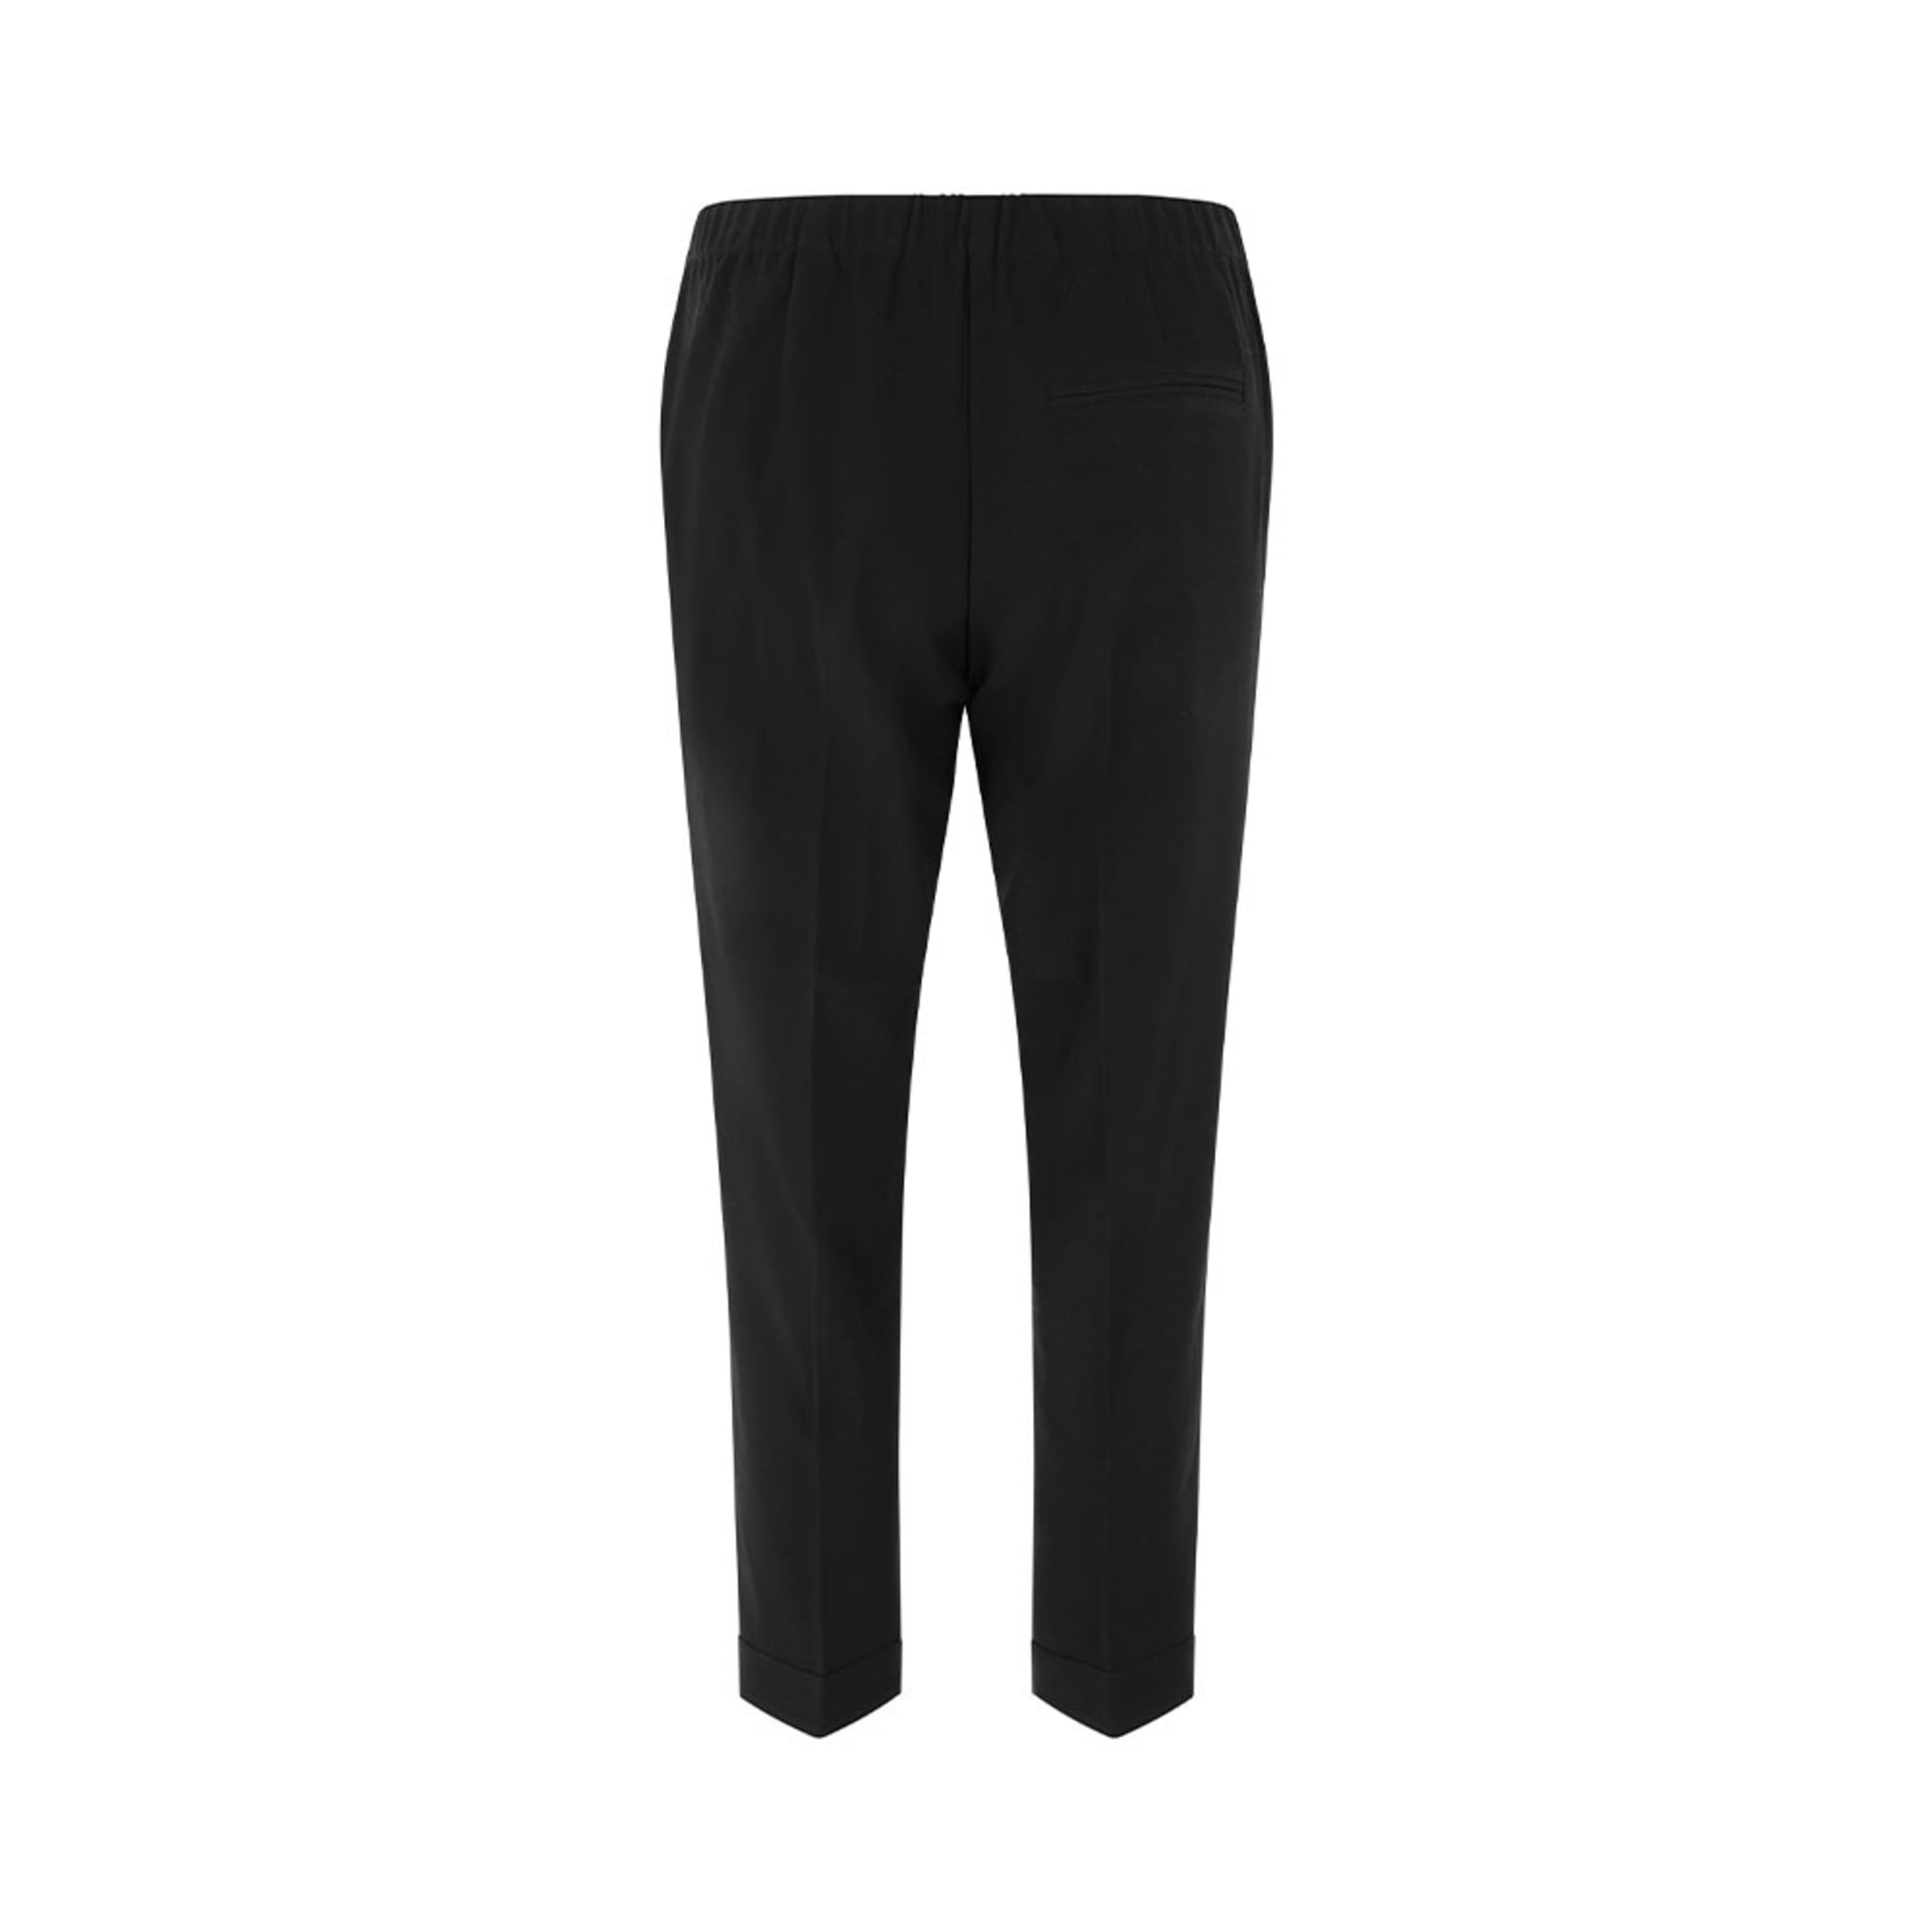 Hoys trousers 14318, Black